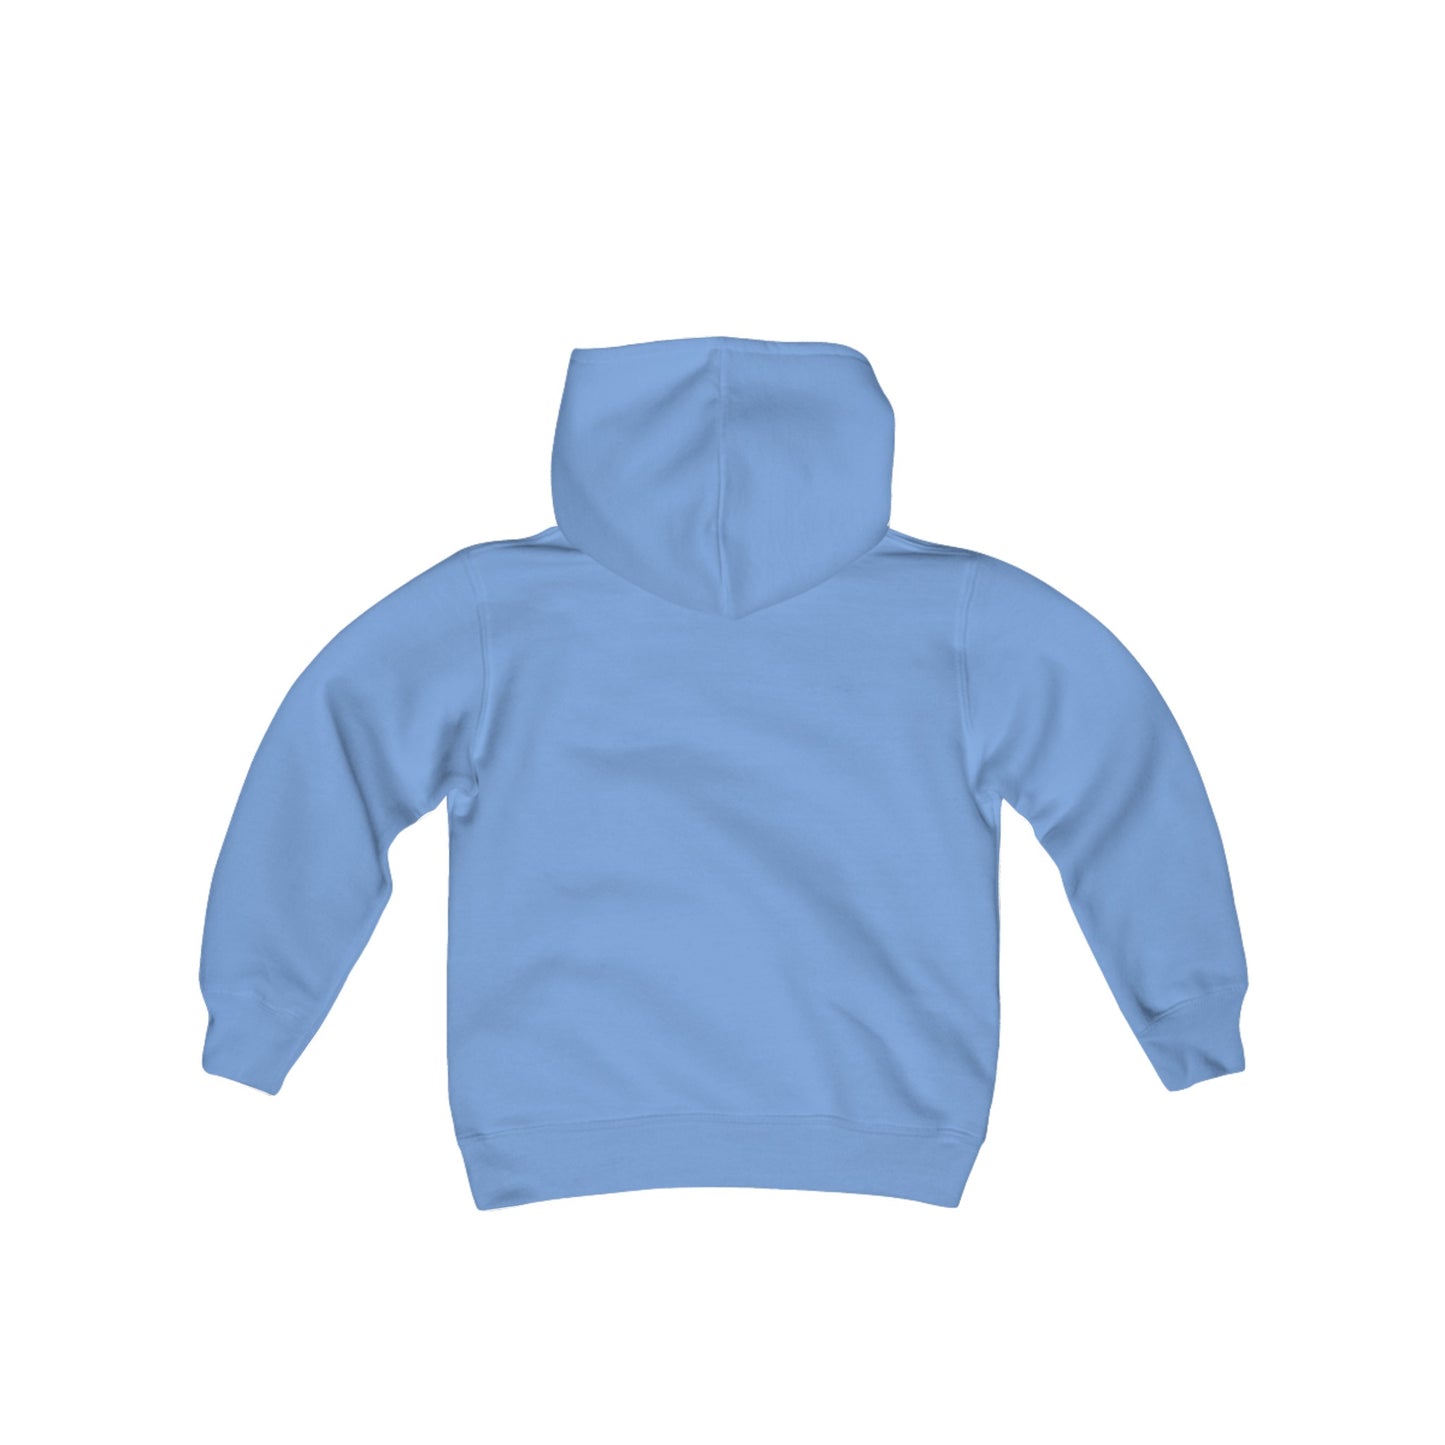 Youth Heavy Blend Hooded Sweatshirt - My MN Loon - Customizable Logo